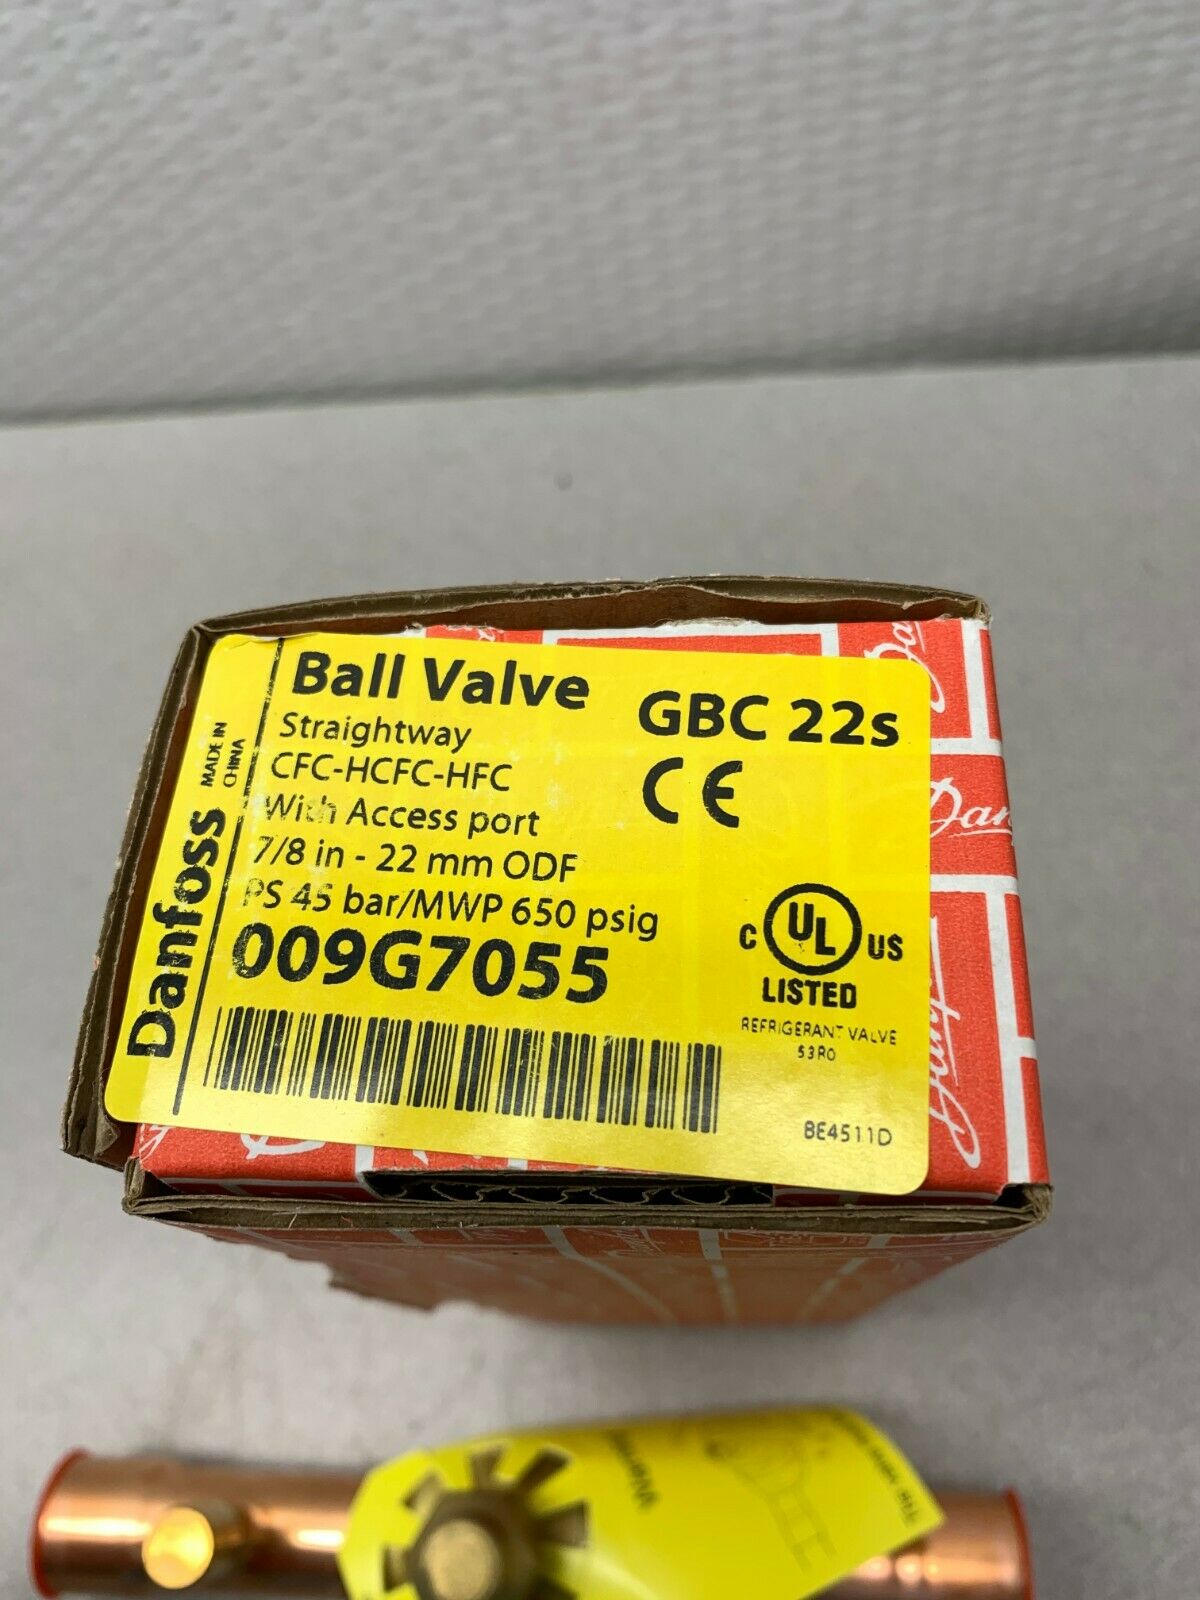 NEW IN BOX DANFOSS CFC-HCFC-HFC BALL VALVE STRAIGHTWAY WITH ACCESS PORT 009G7055